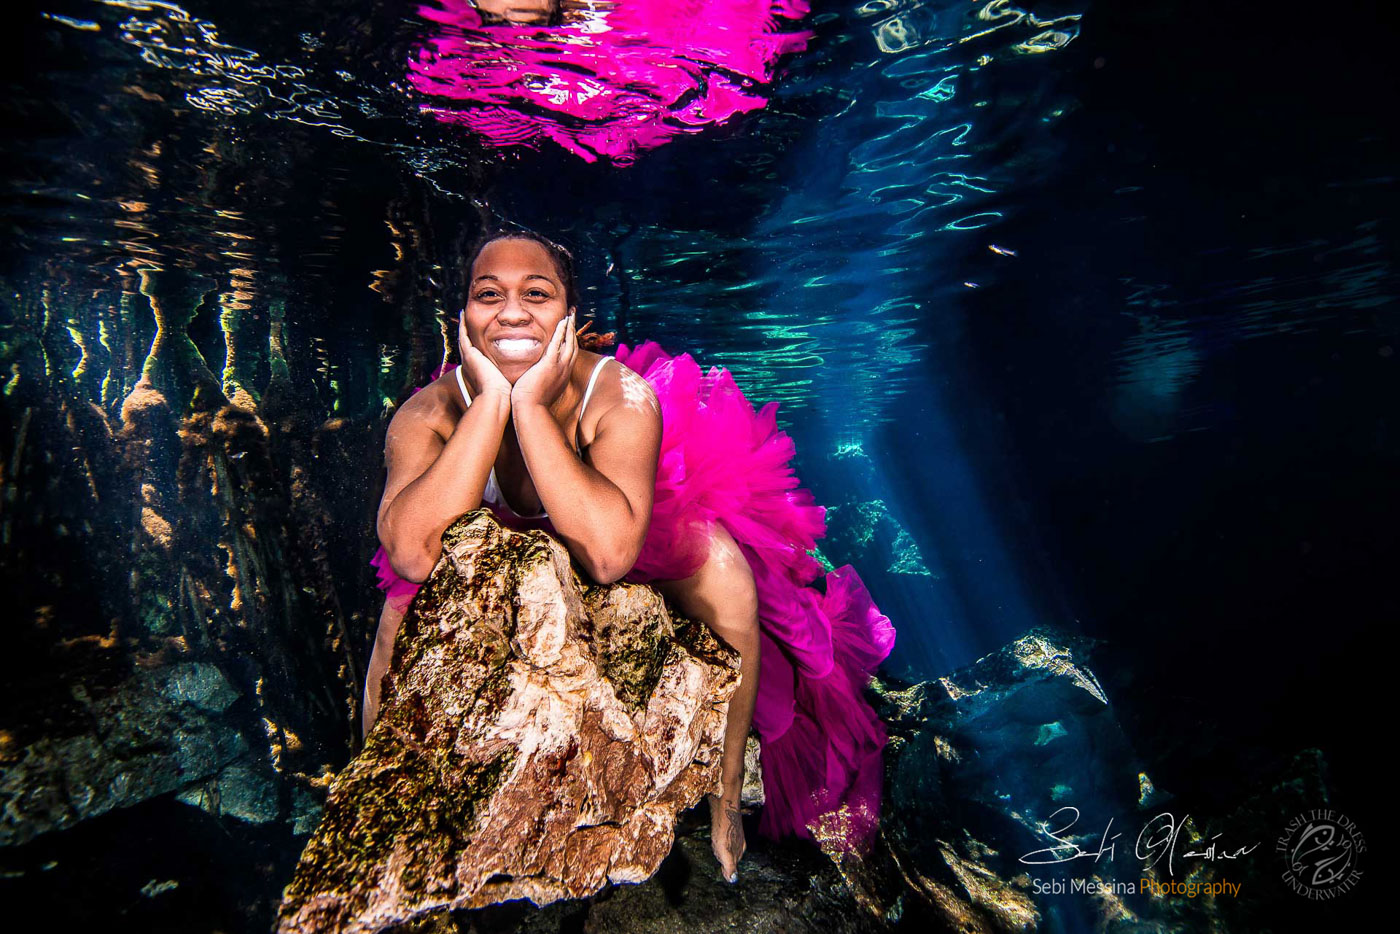 Cenote Photoshoots Tulum - Sebi Messina Photography